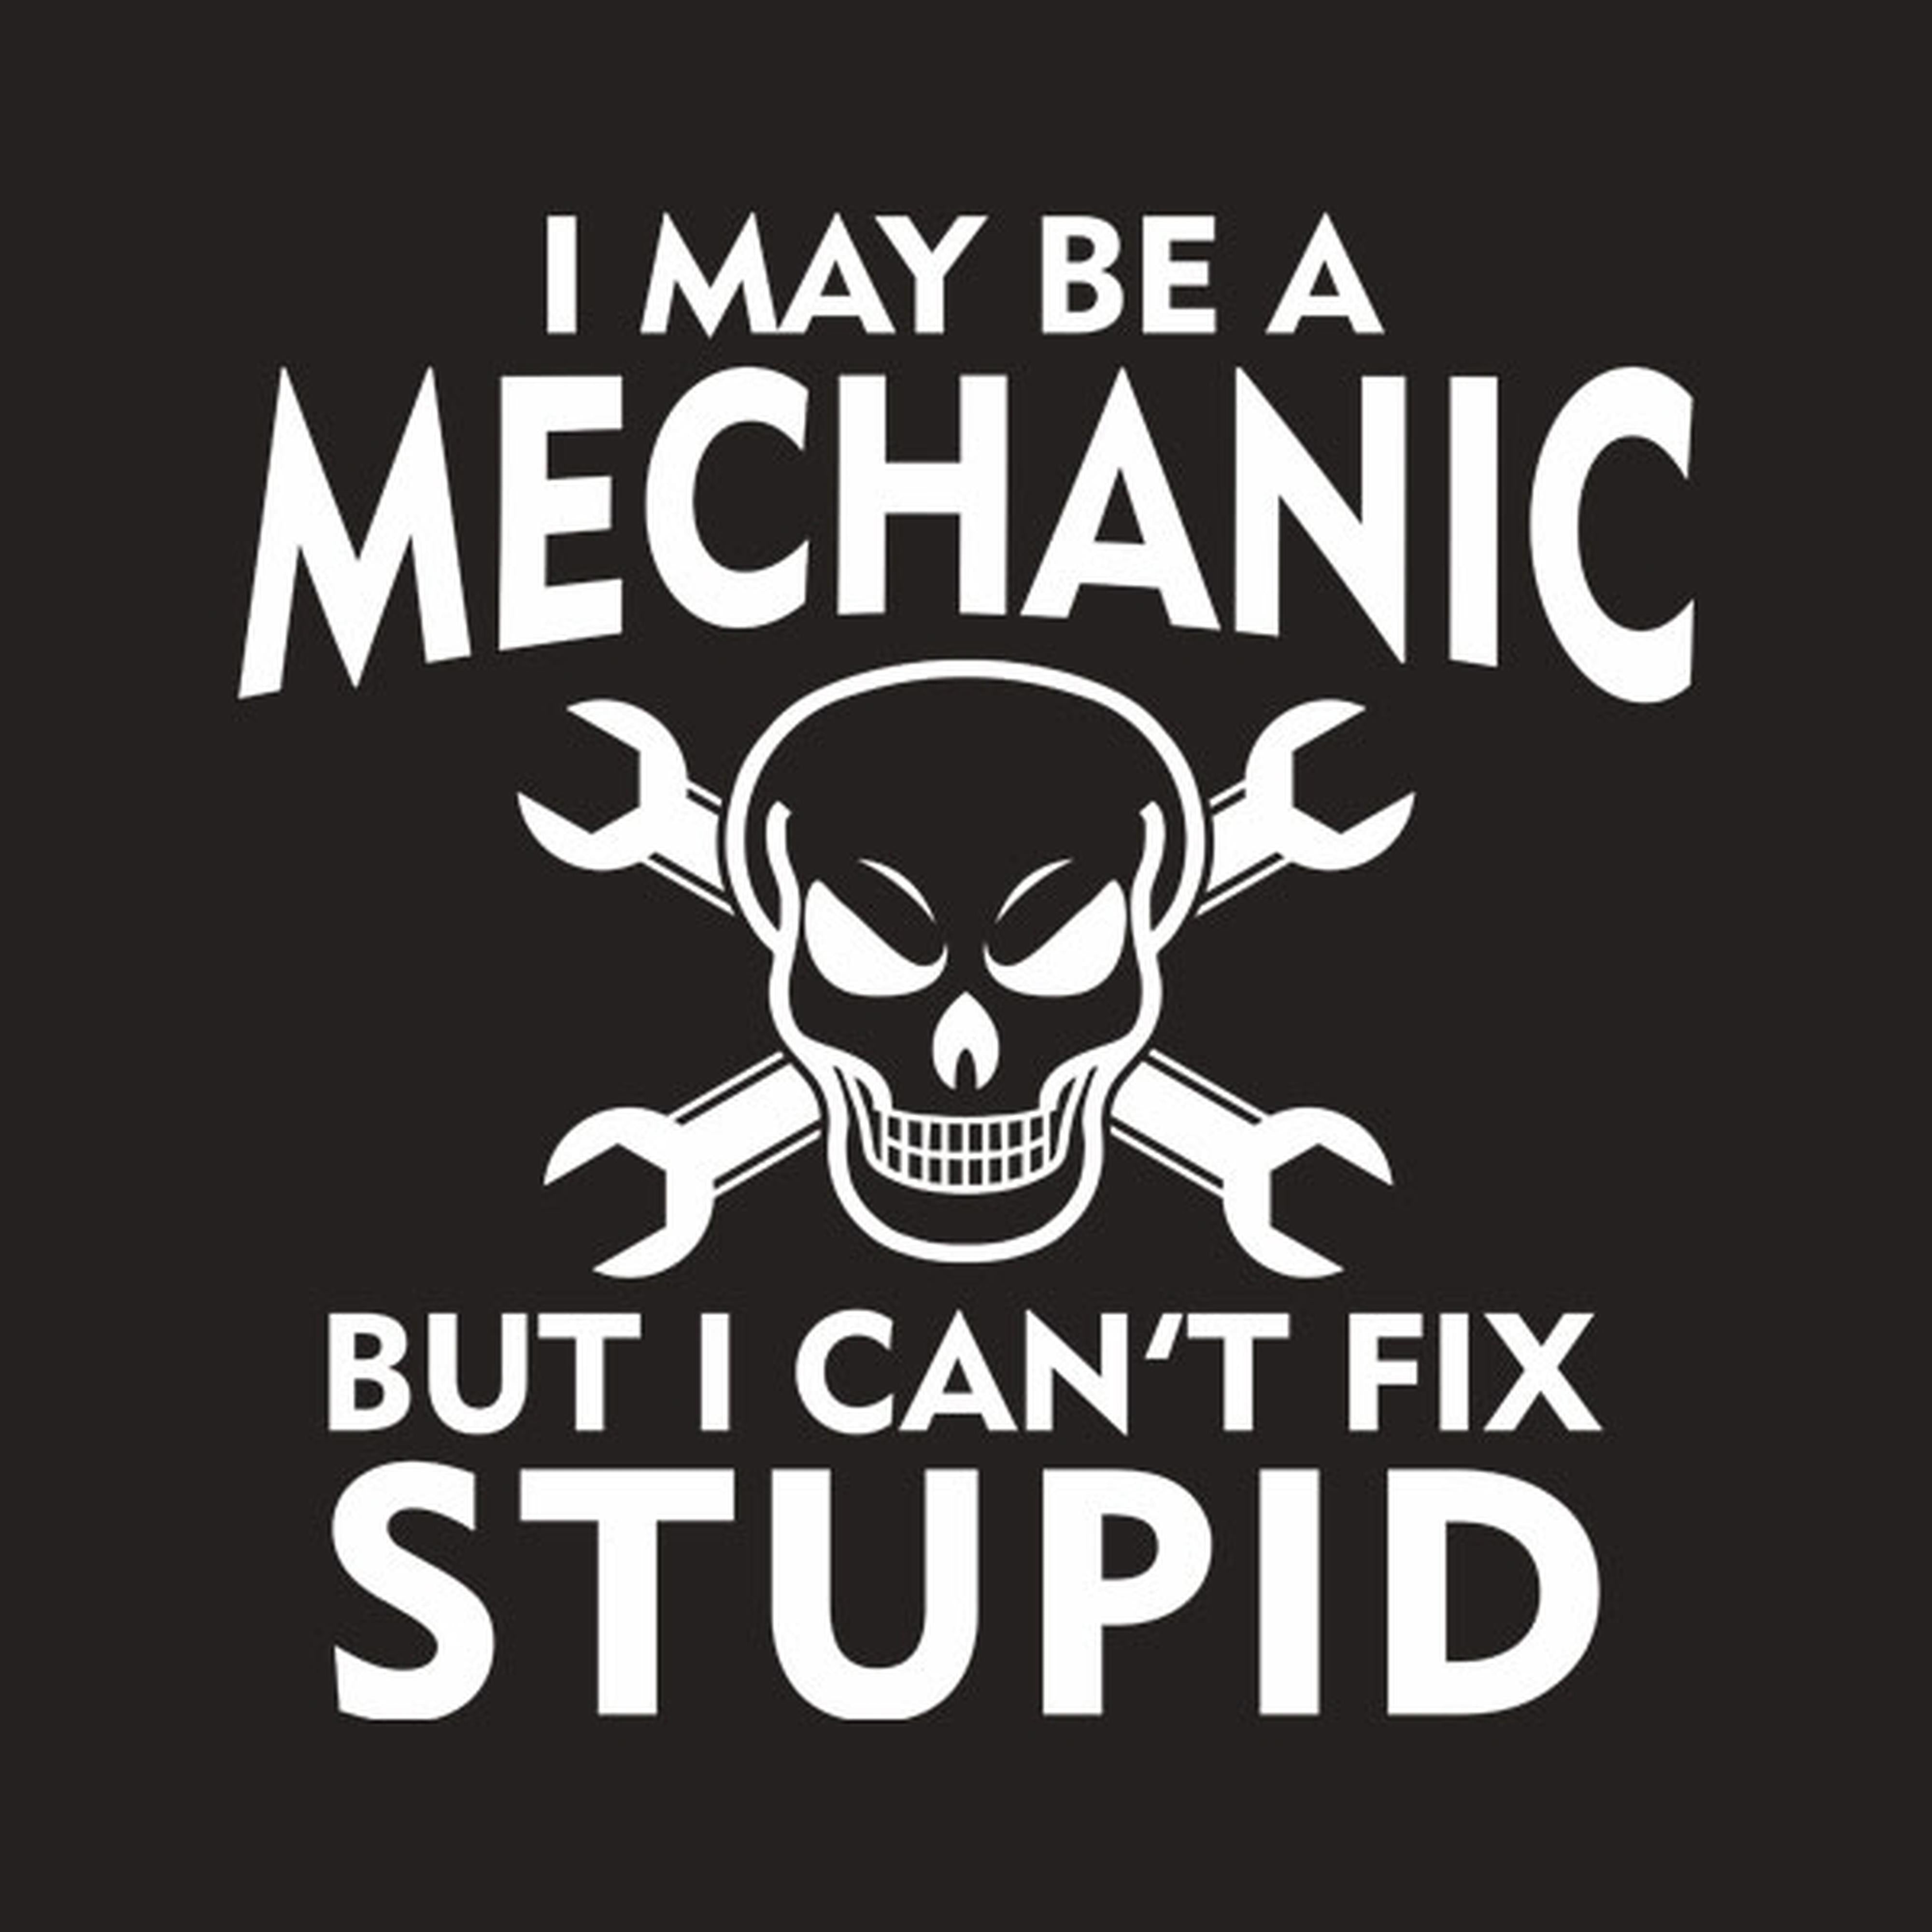 I may be a mechanic but I can't fix stupid - T-shirt